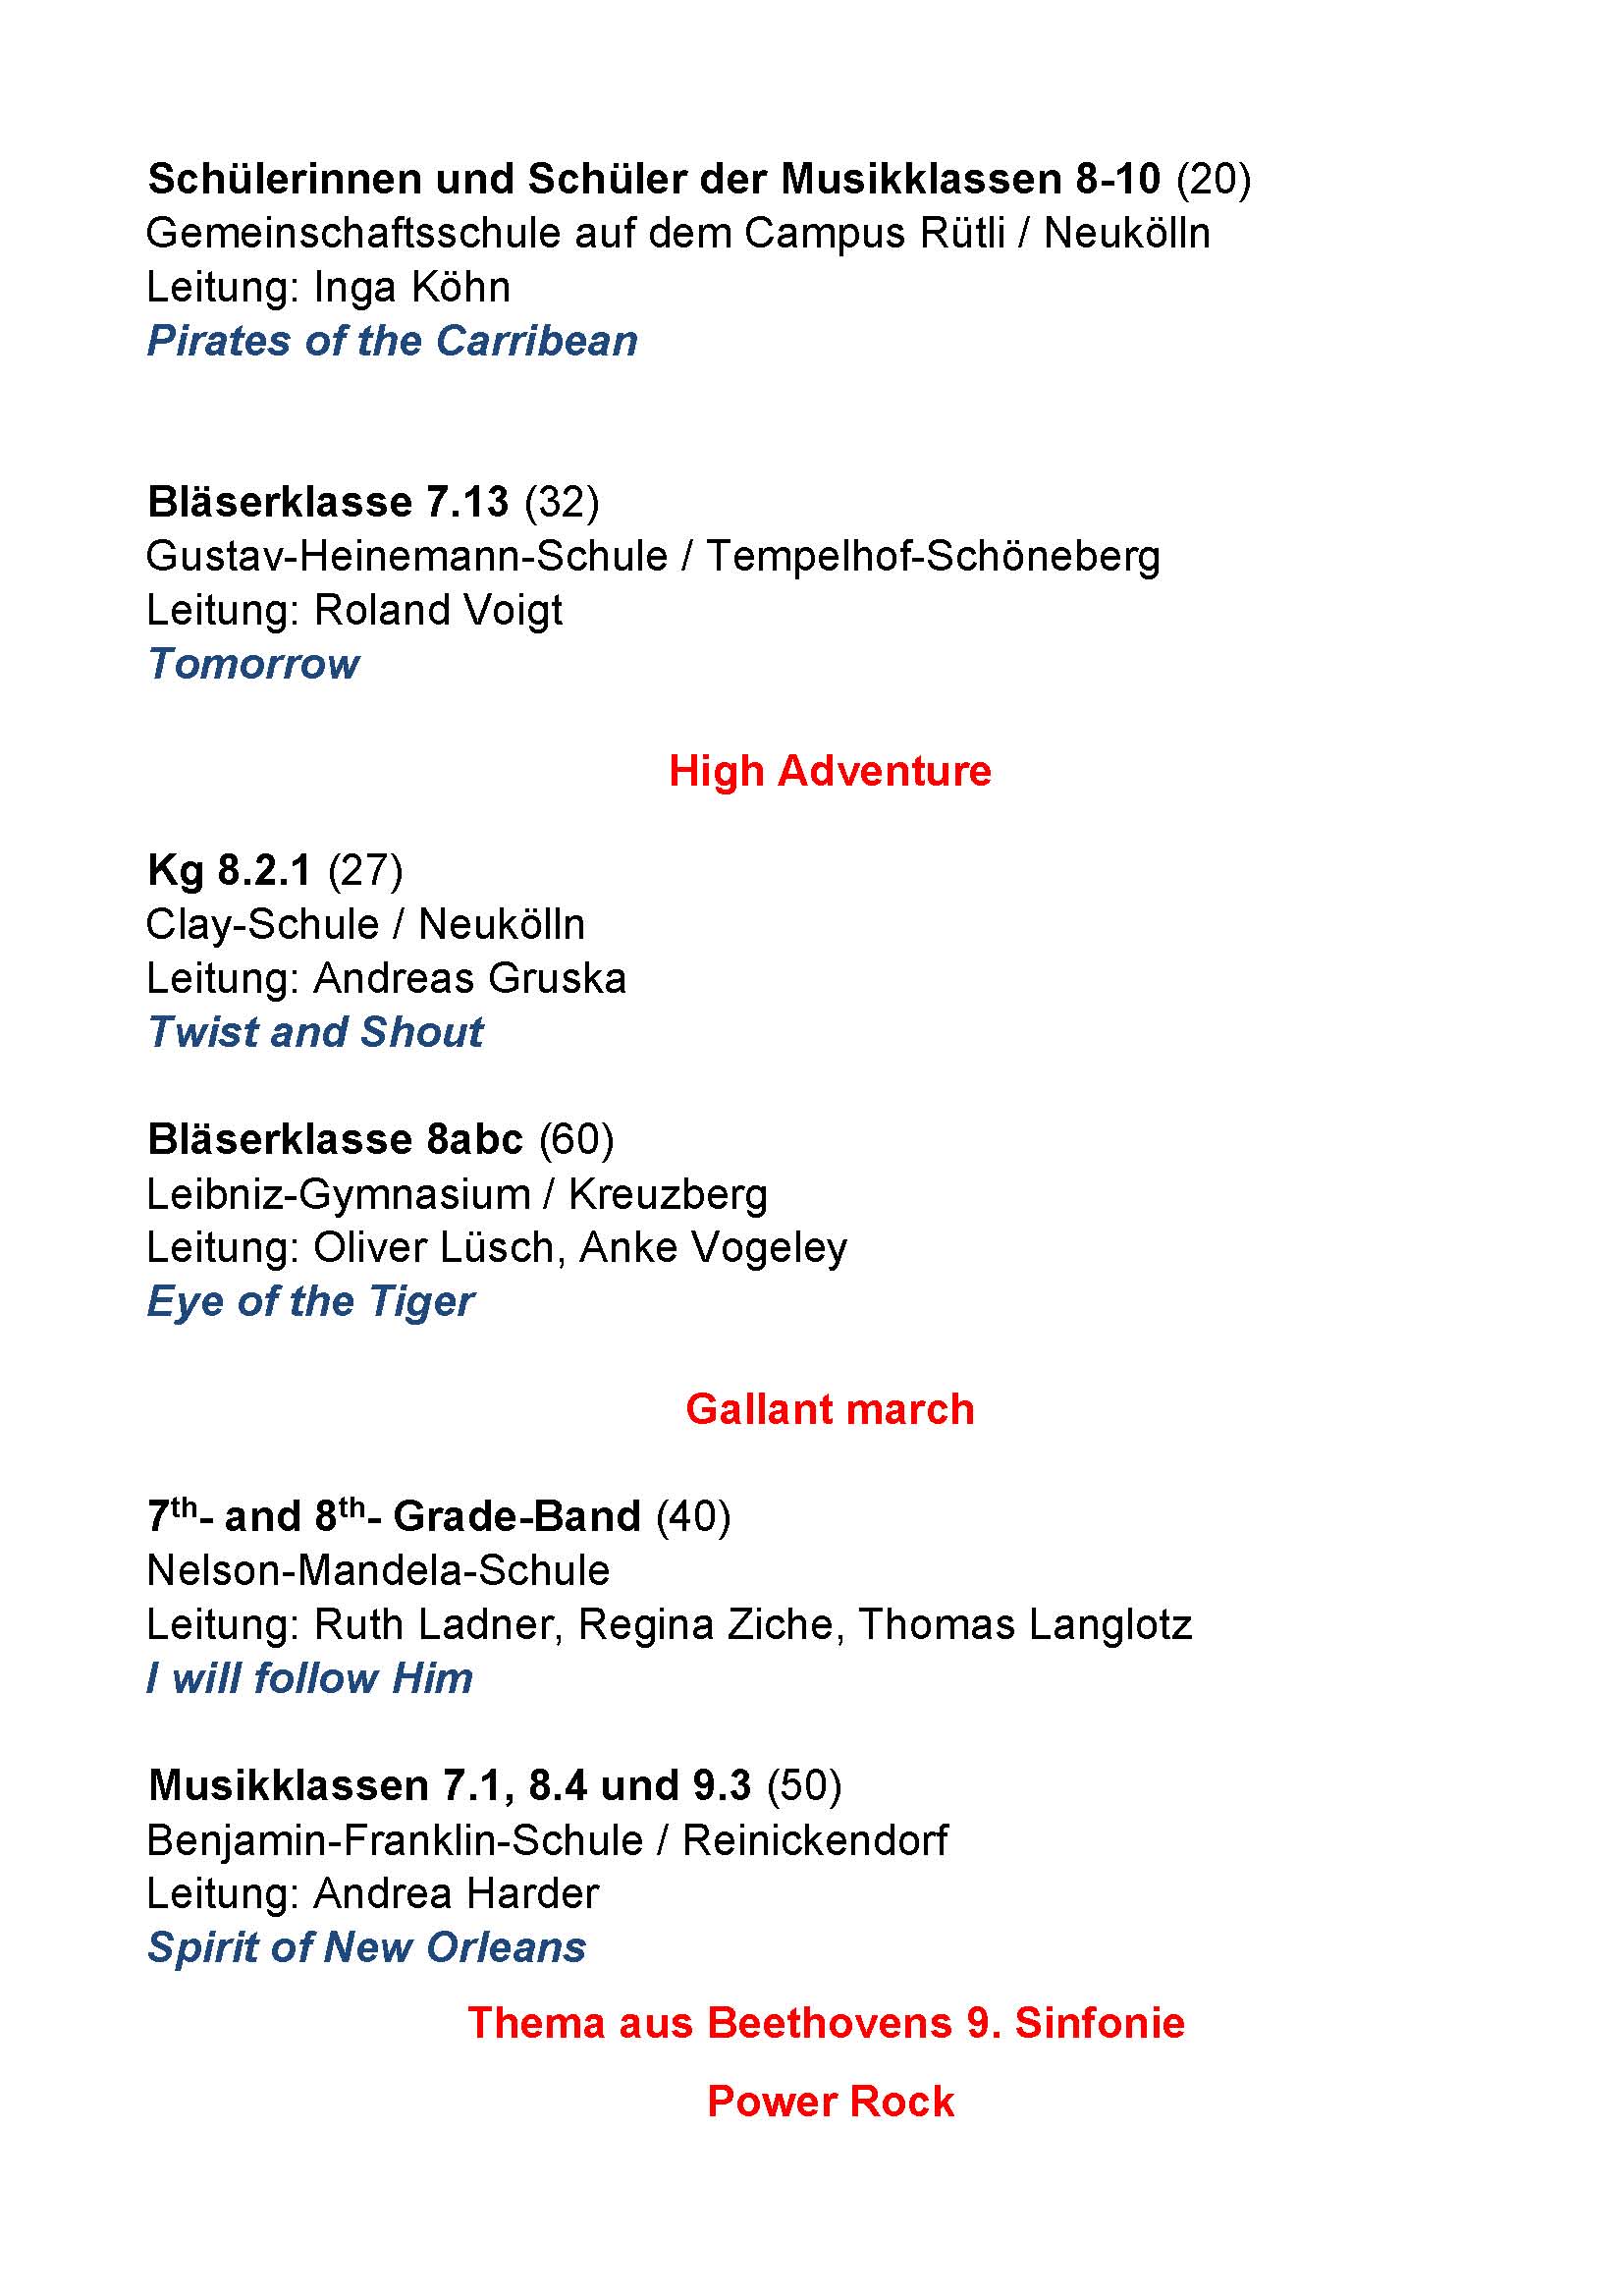 Programm Berliner Bläserklassenfestival 2015 Seite 3